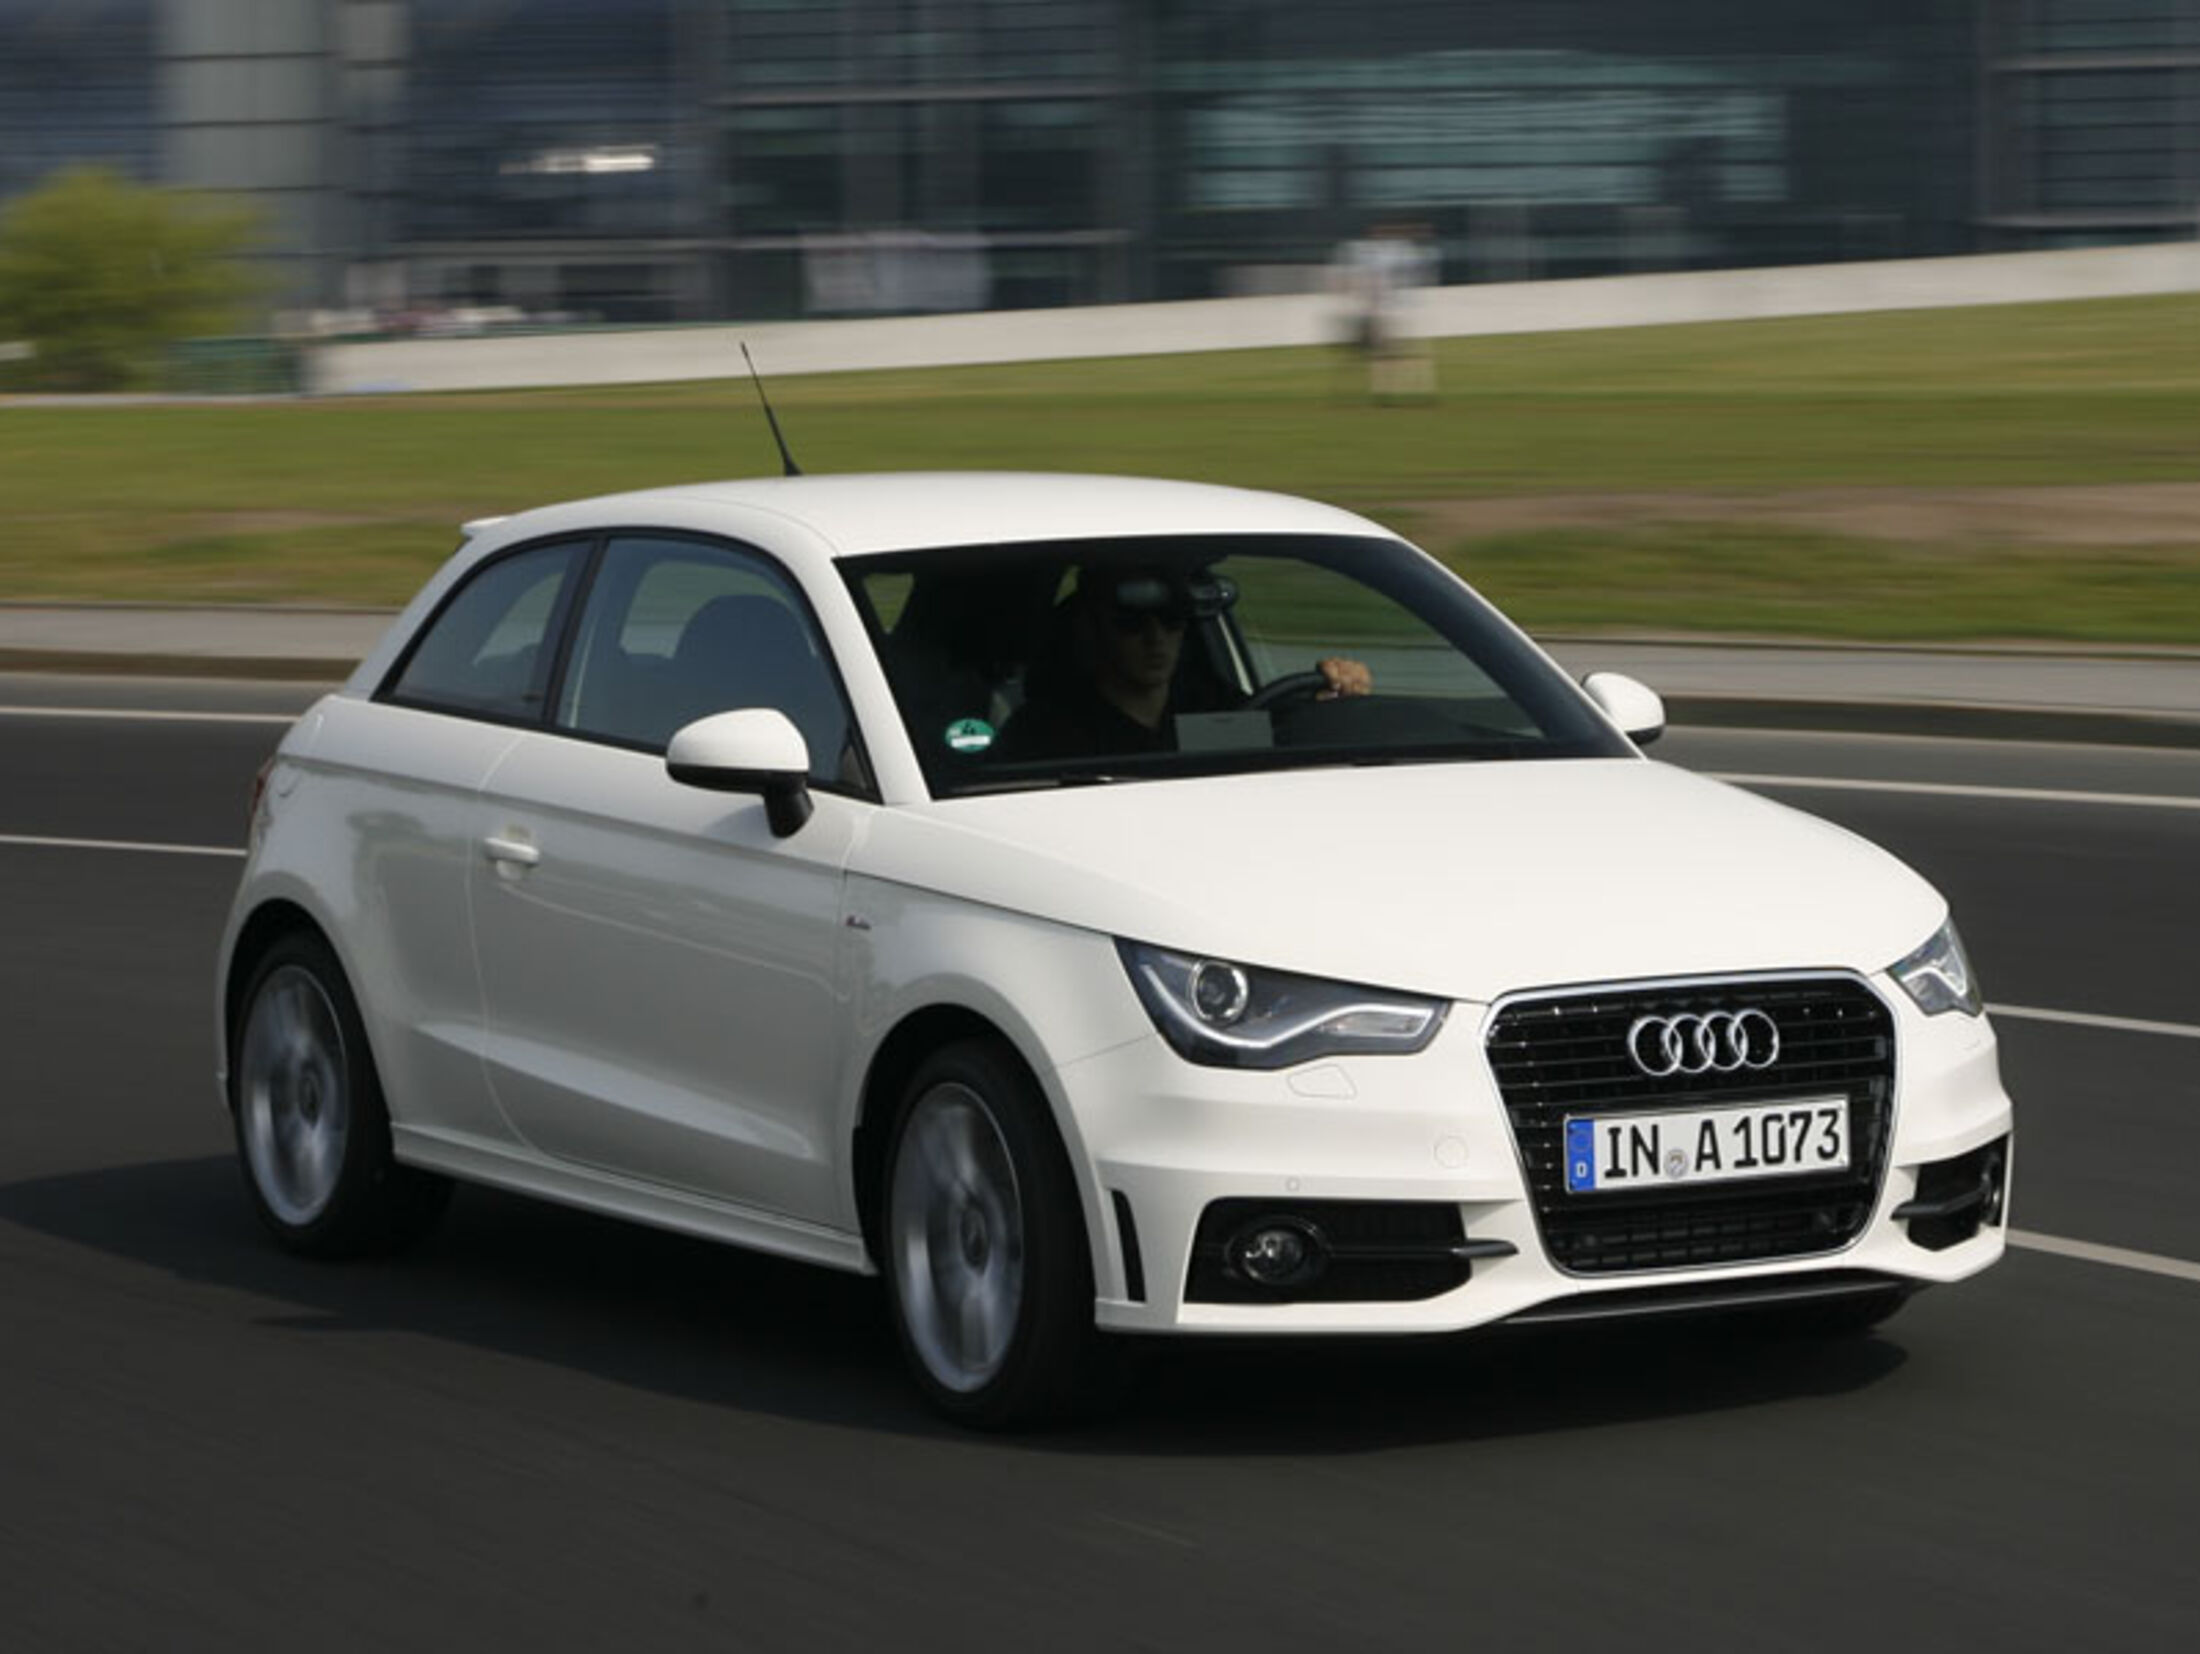 https://imgr1.auto-motor-und-sport.de/Audi-A1-jsonLd4x3-bfdc22a3-367640.jpg